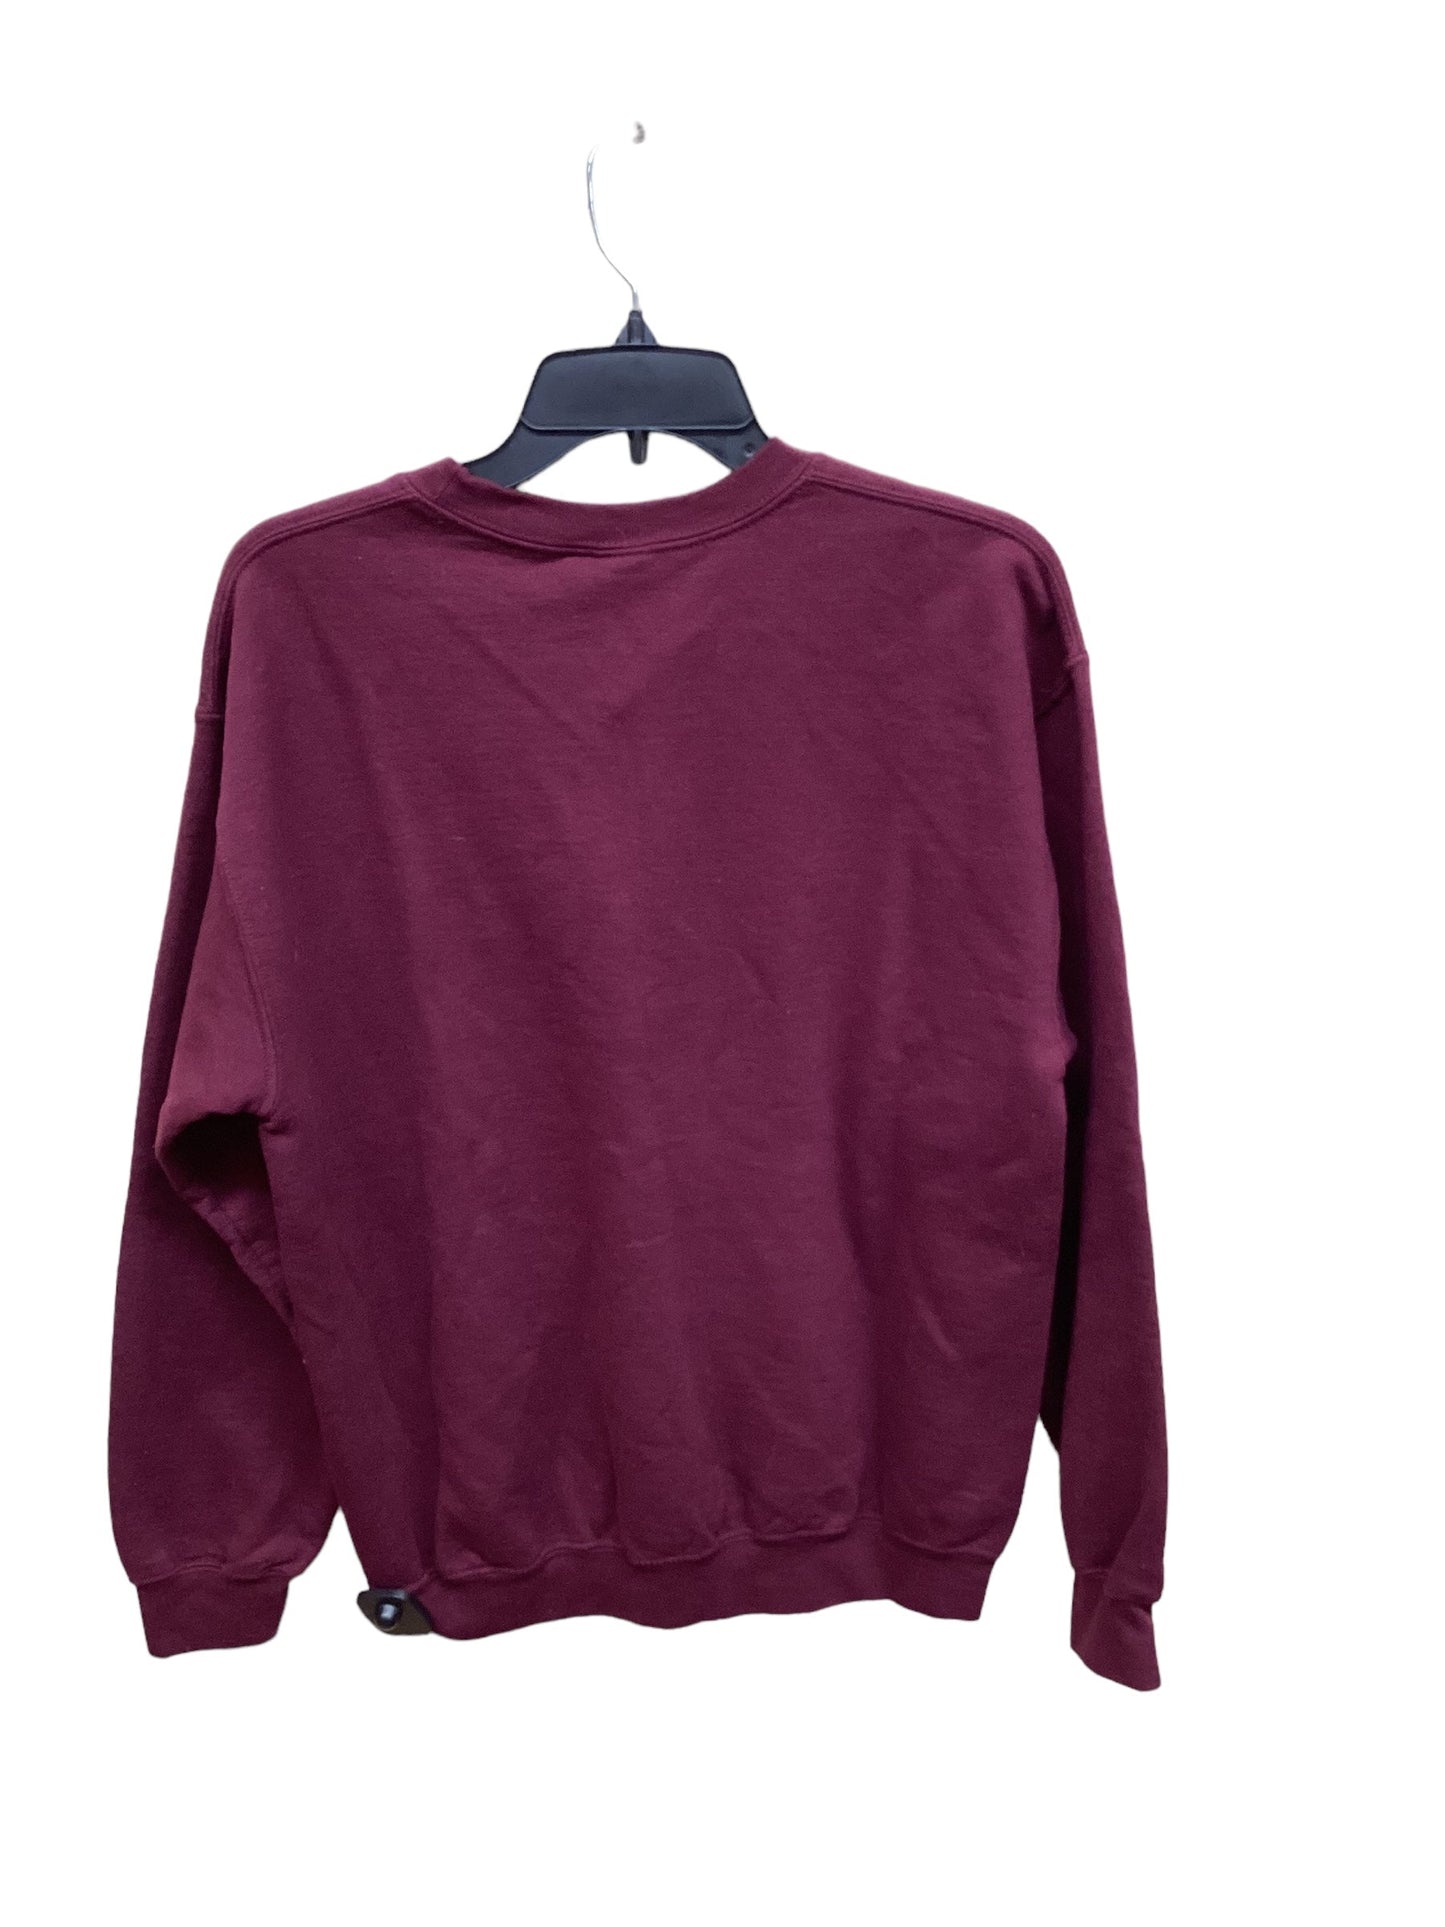 Sweater By Gildan  Size: M